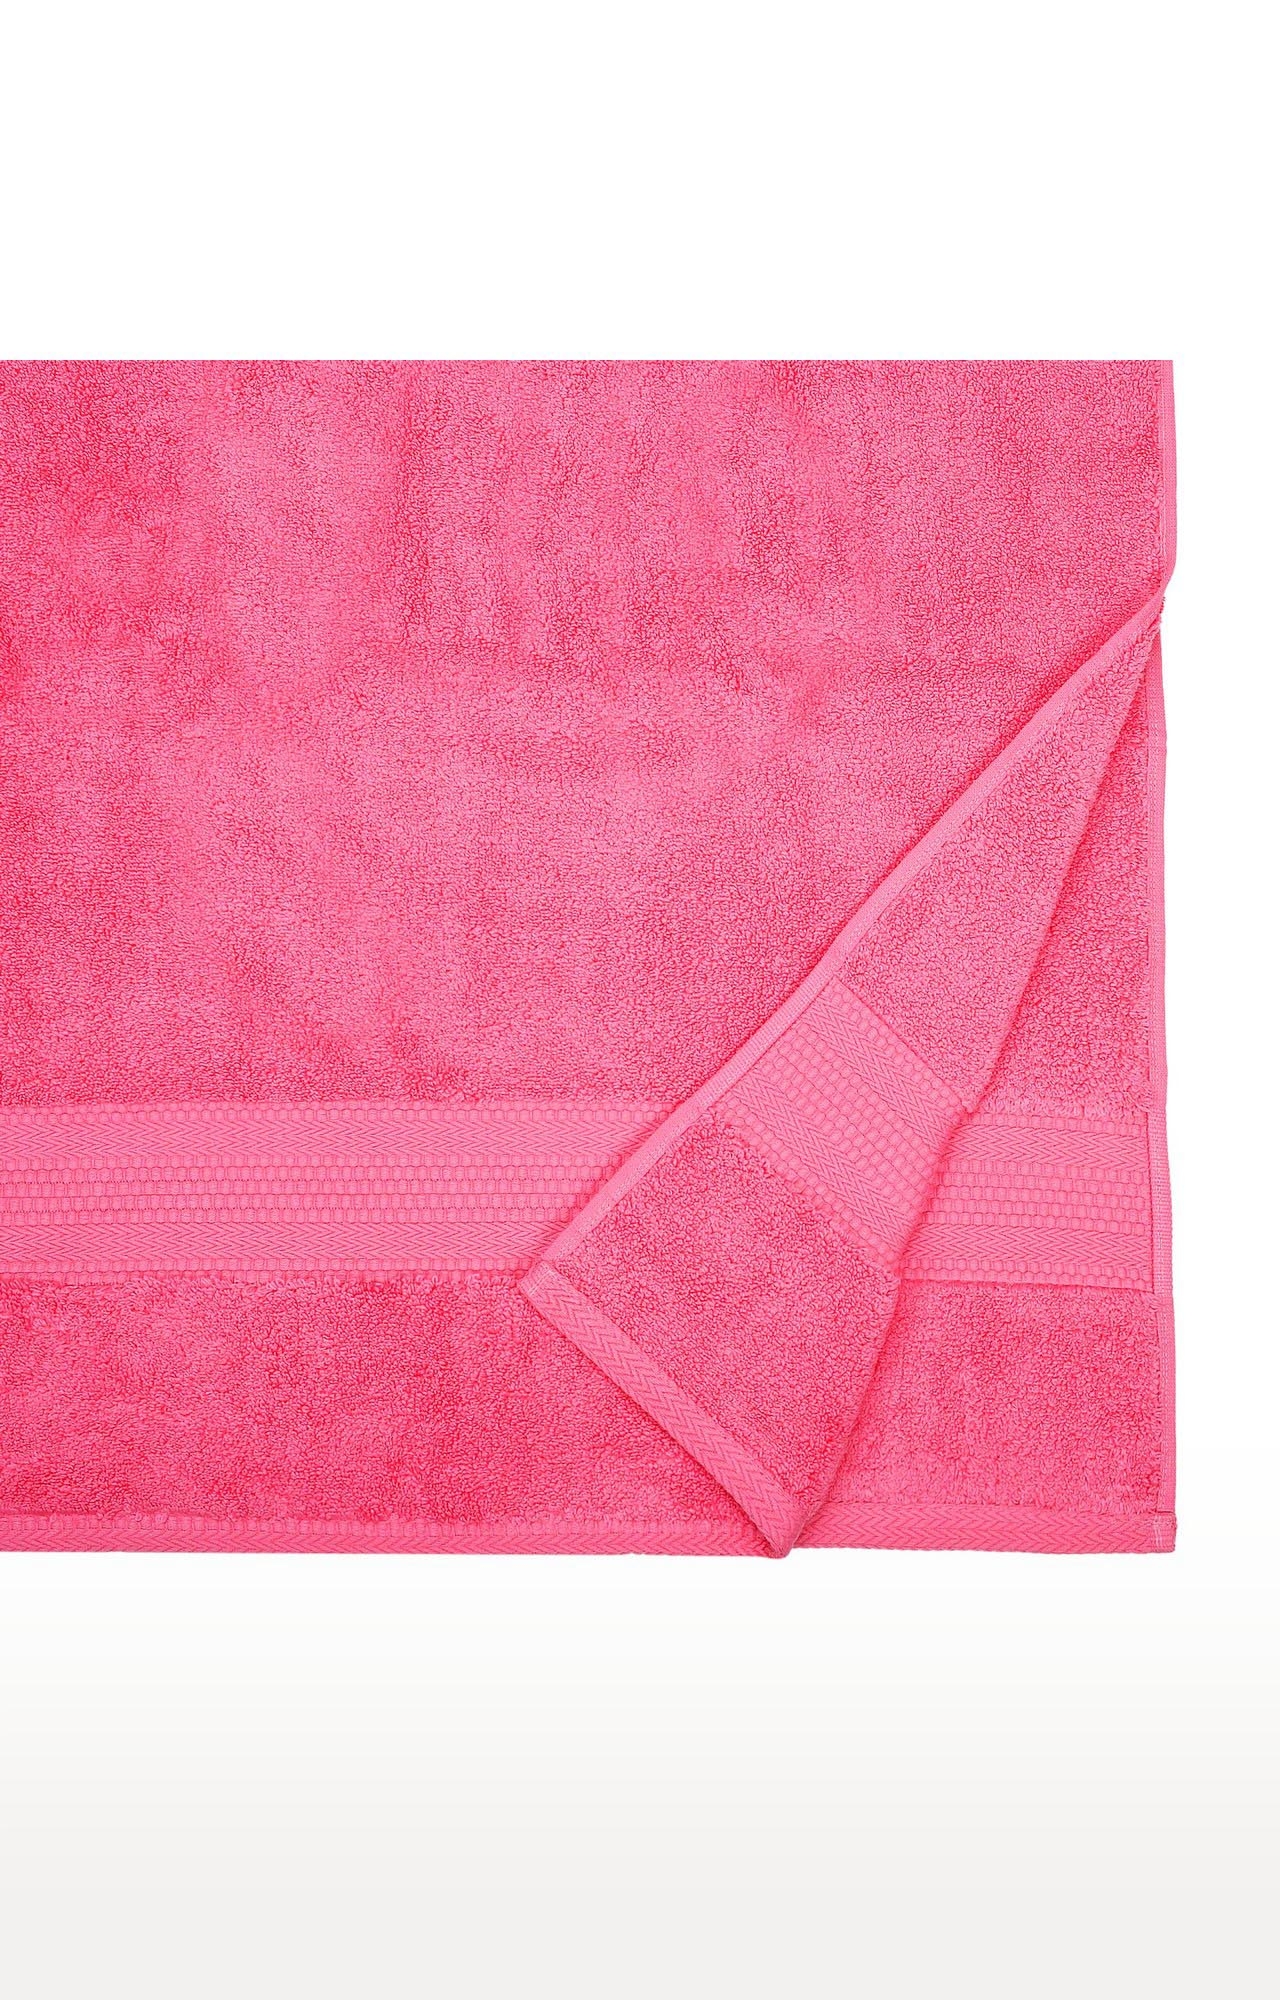 Sita Fabrics | Sita Fabrics Premium Cotton Super Soft 480 GSM Bath Towel  2